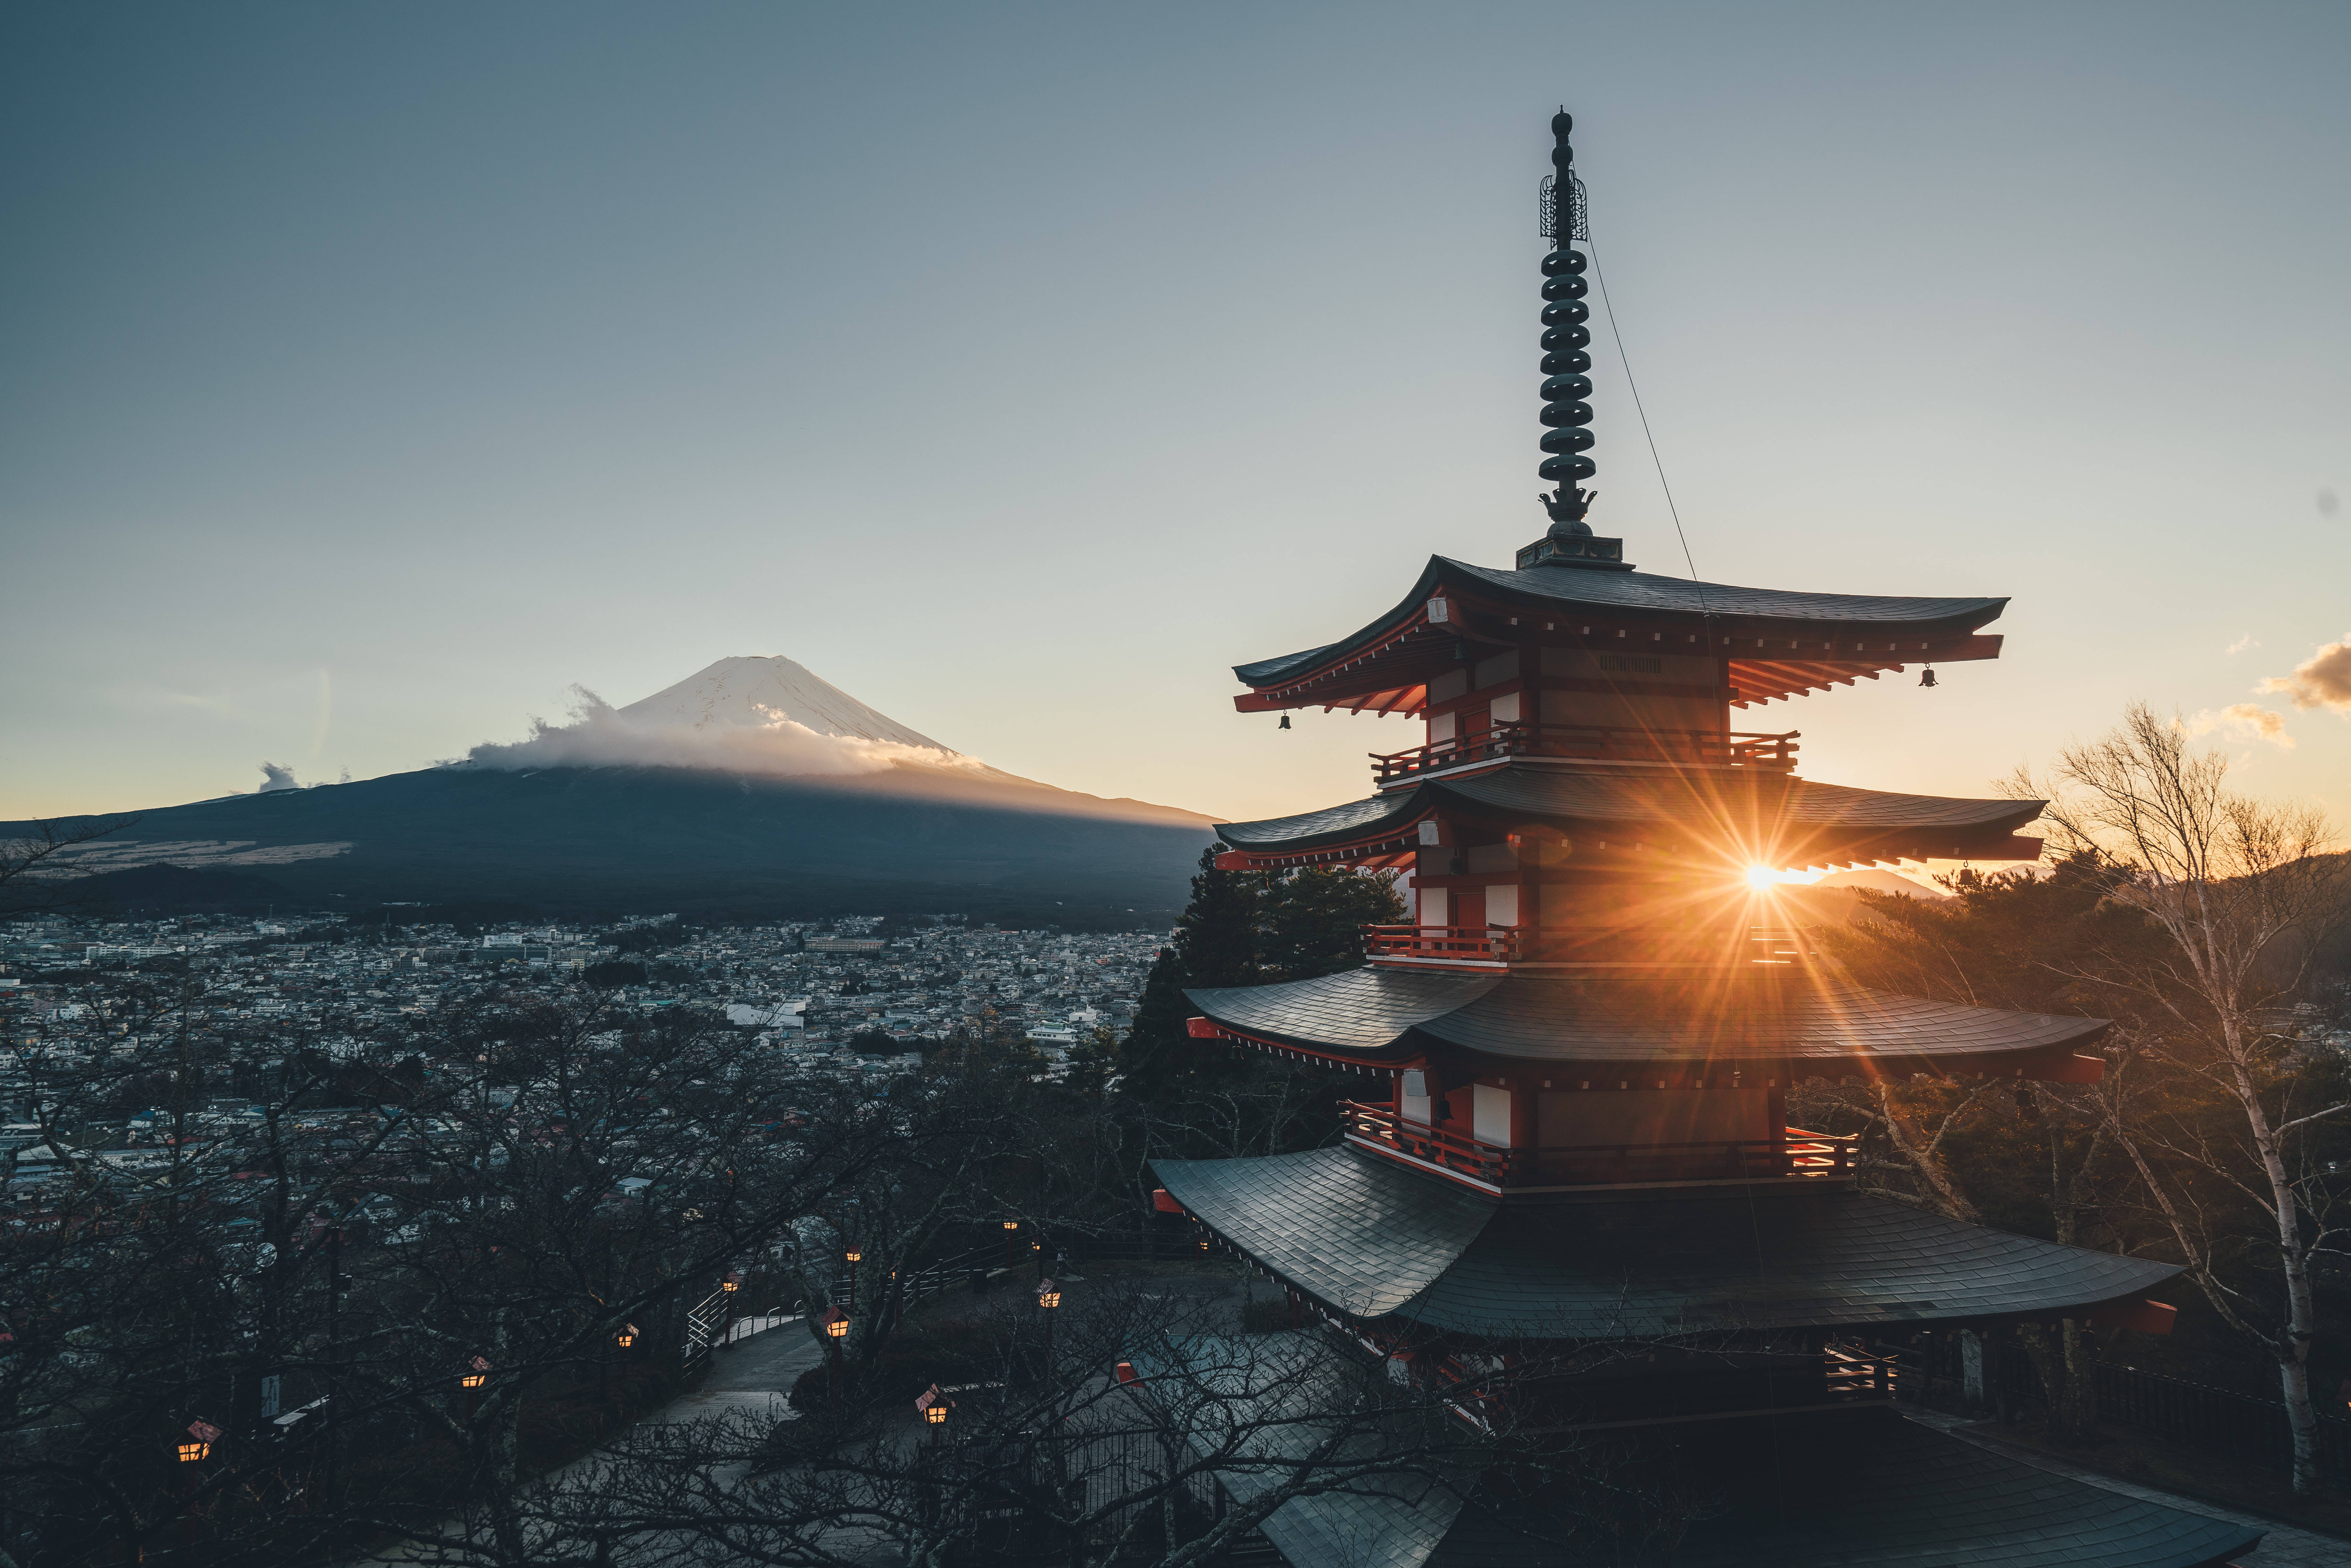 Japanese Hd Chureito Pagoda And Mount Fuji Sunset Wallpaper